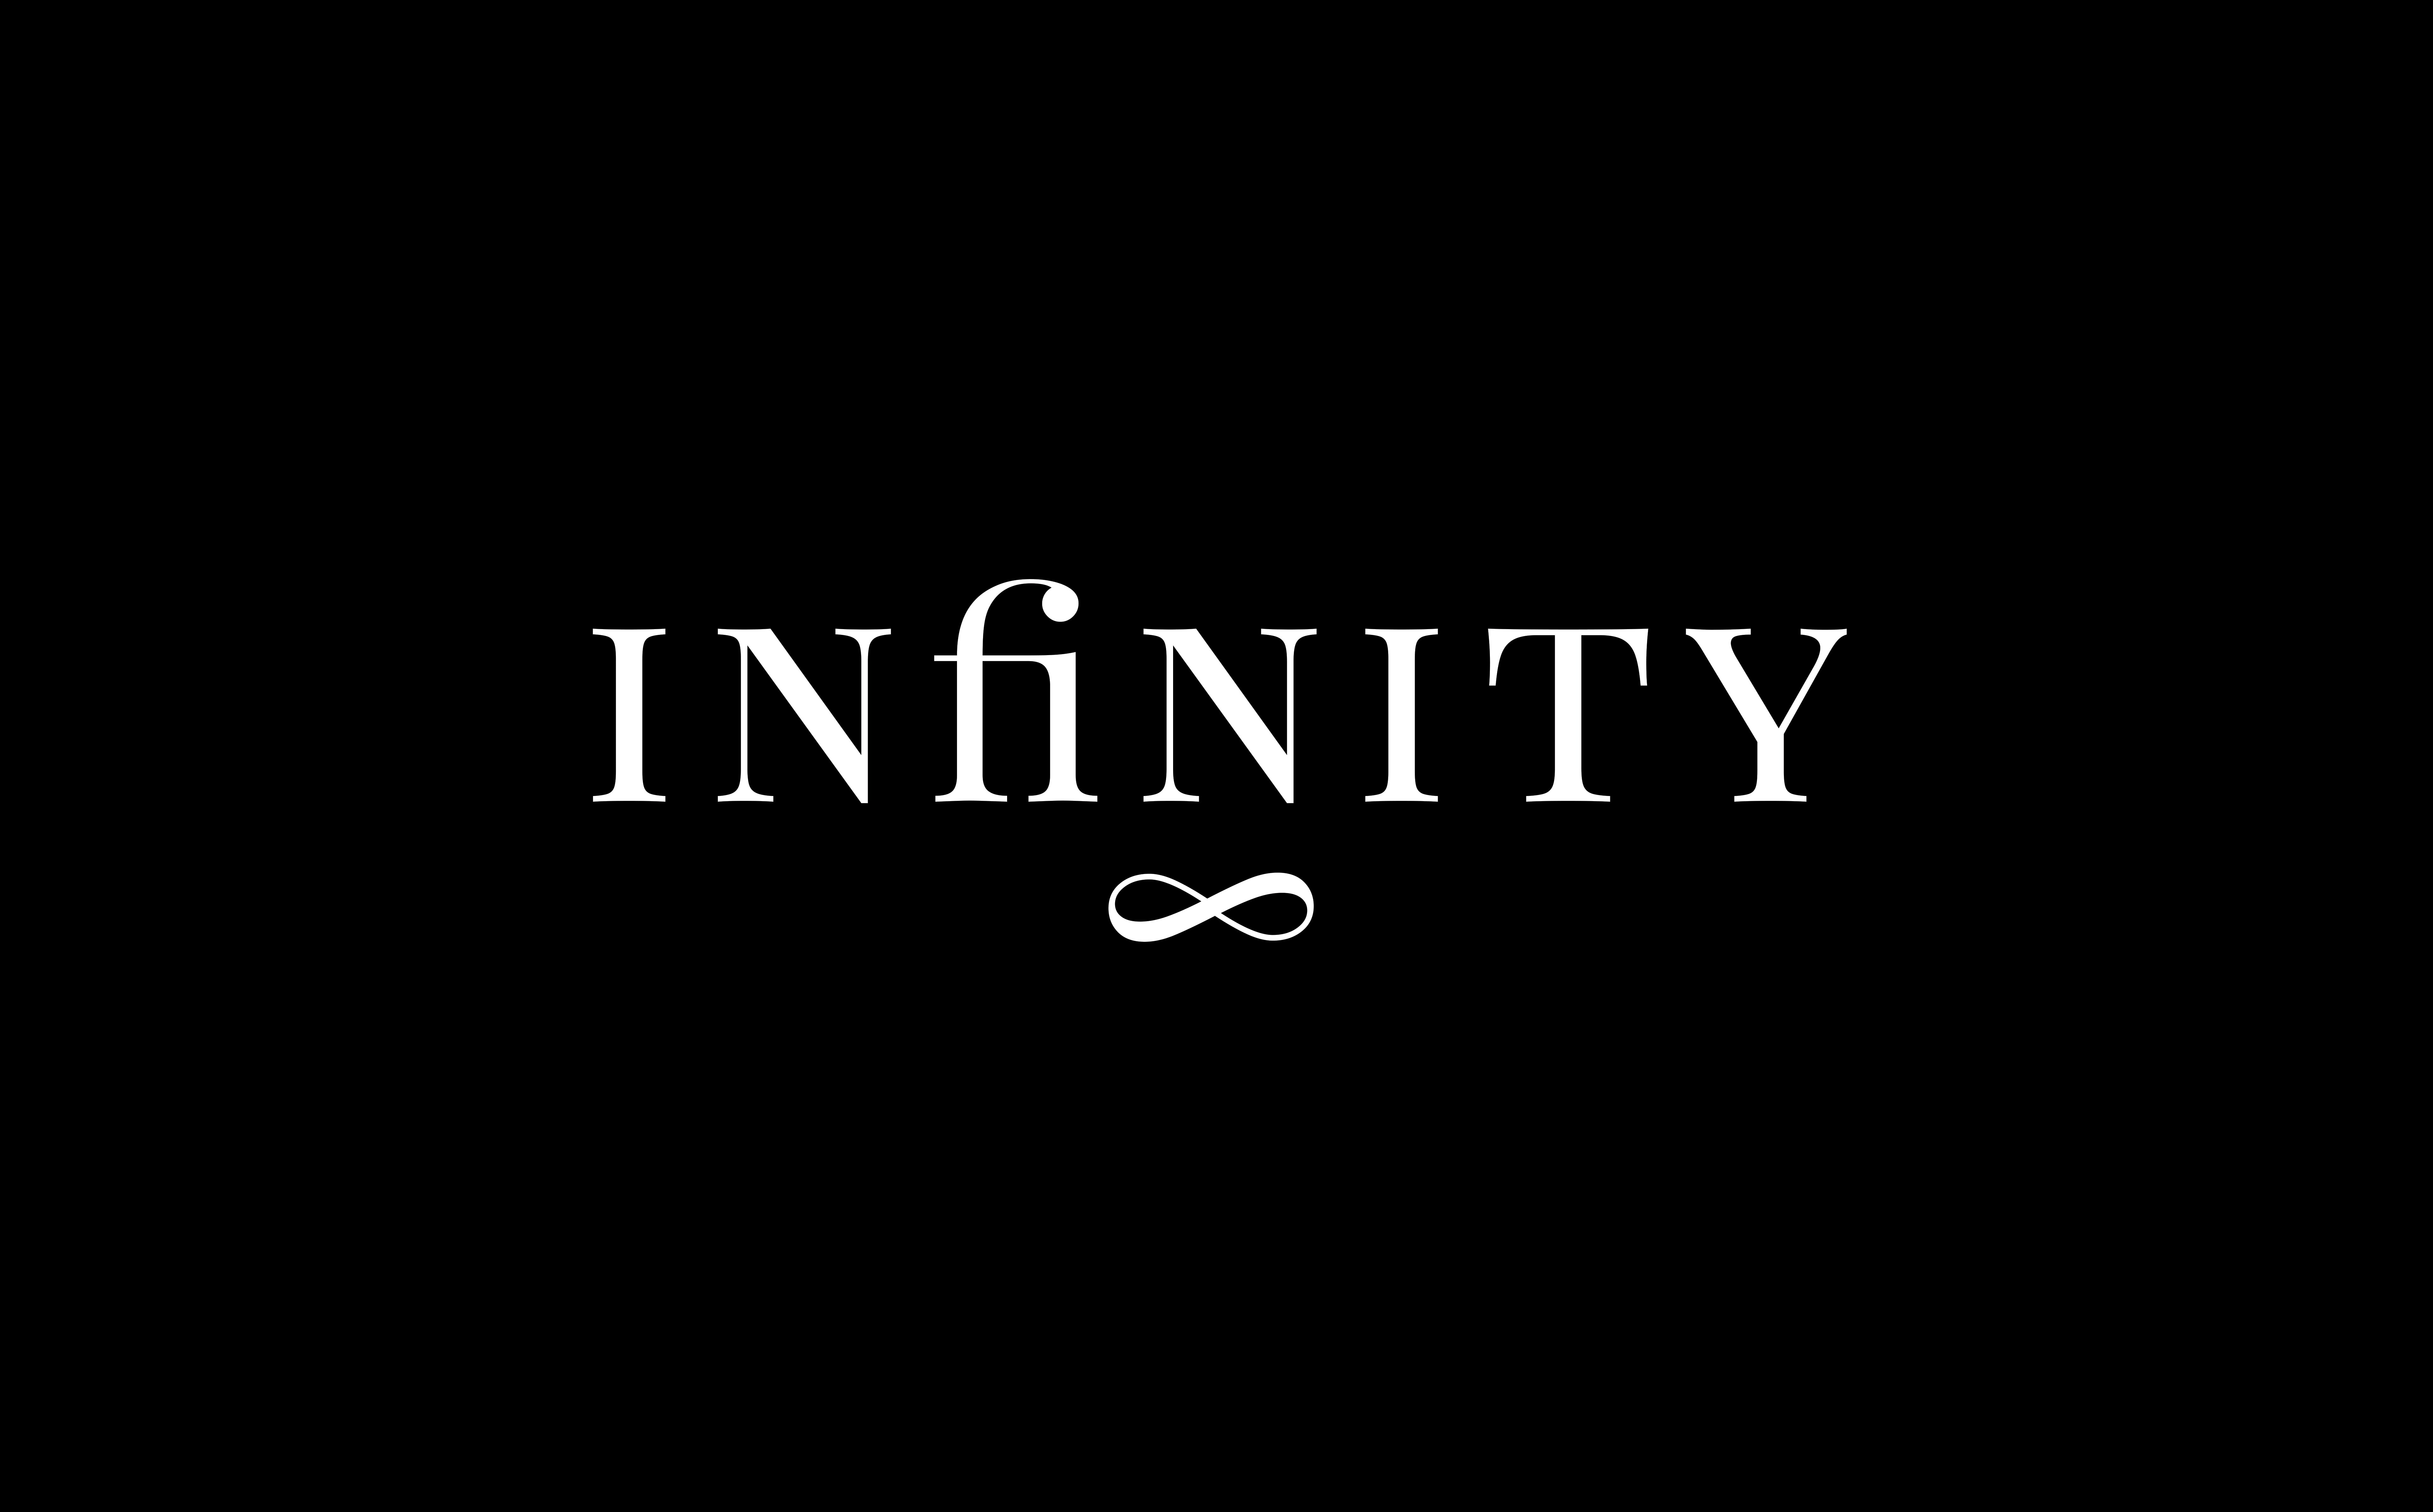 Infinity Black, Artistic, Typography, Design, Symbol